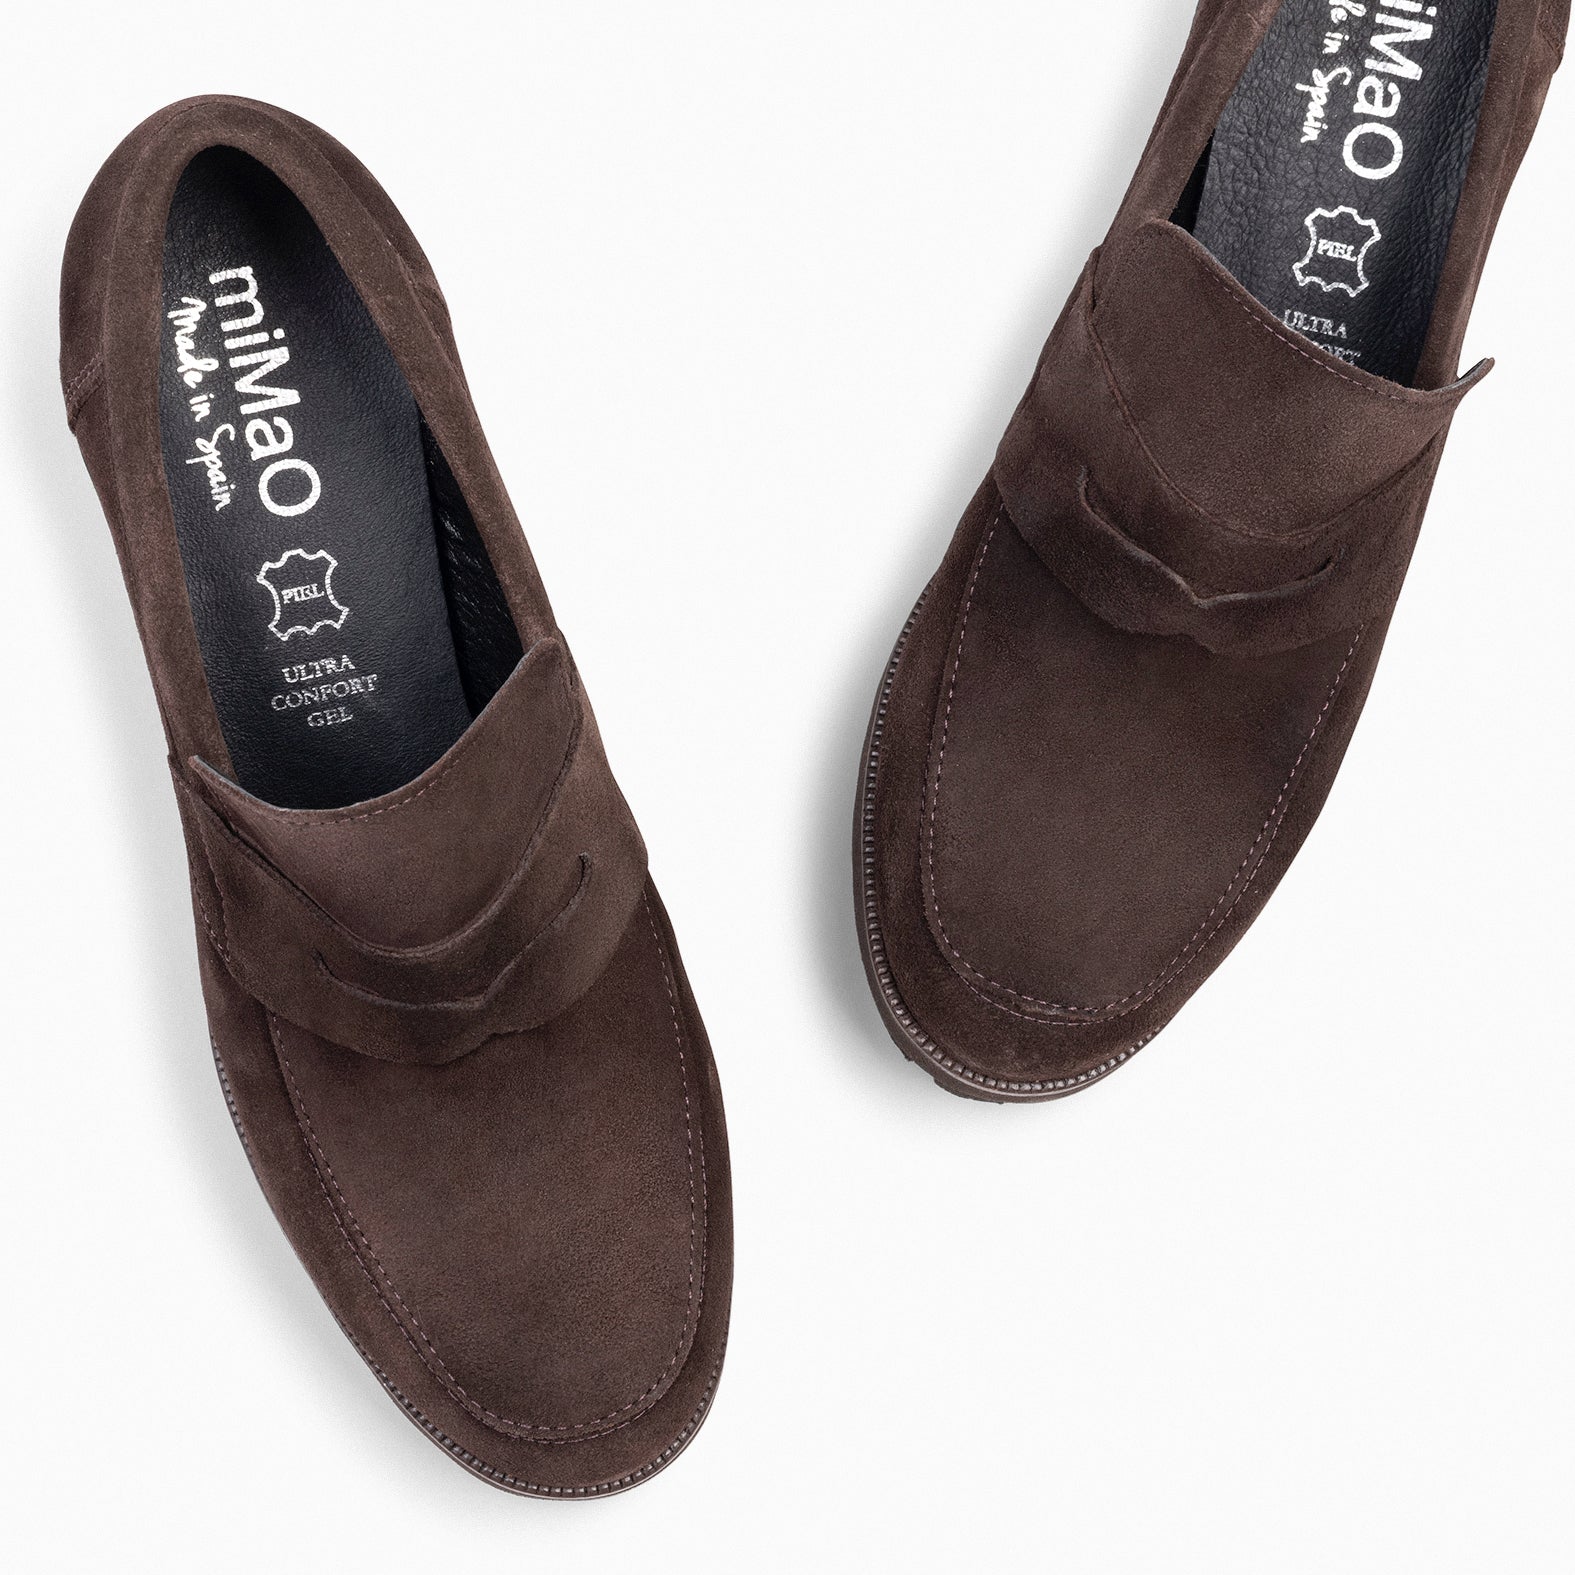 TREND – BROWN high heel moccasins with platform 